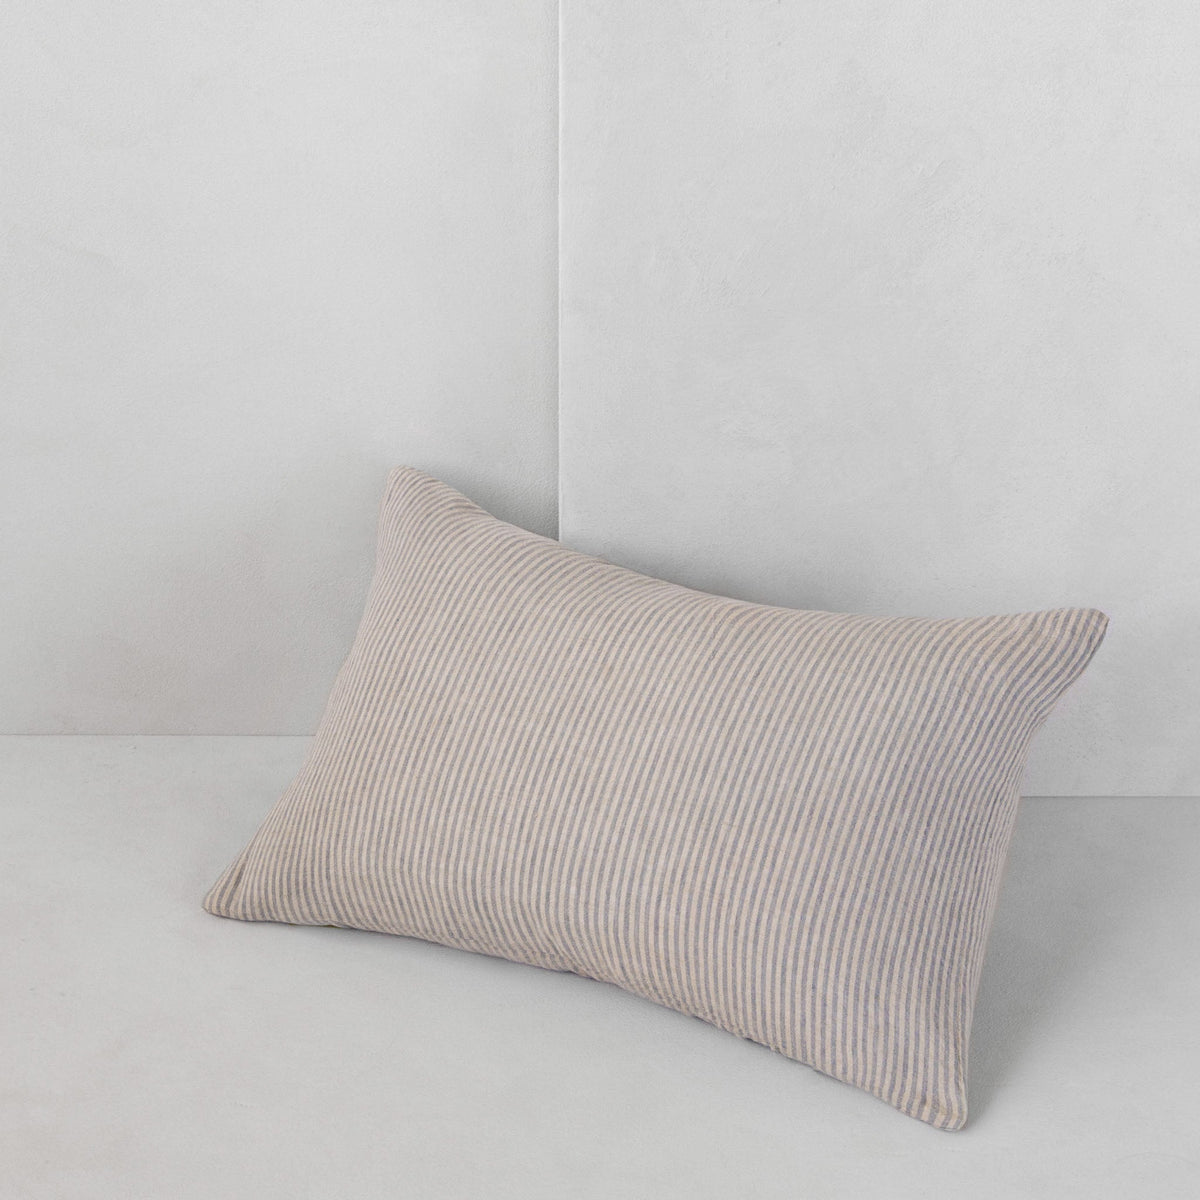 Basix Stripe Linen Pillow - Roy/Sable